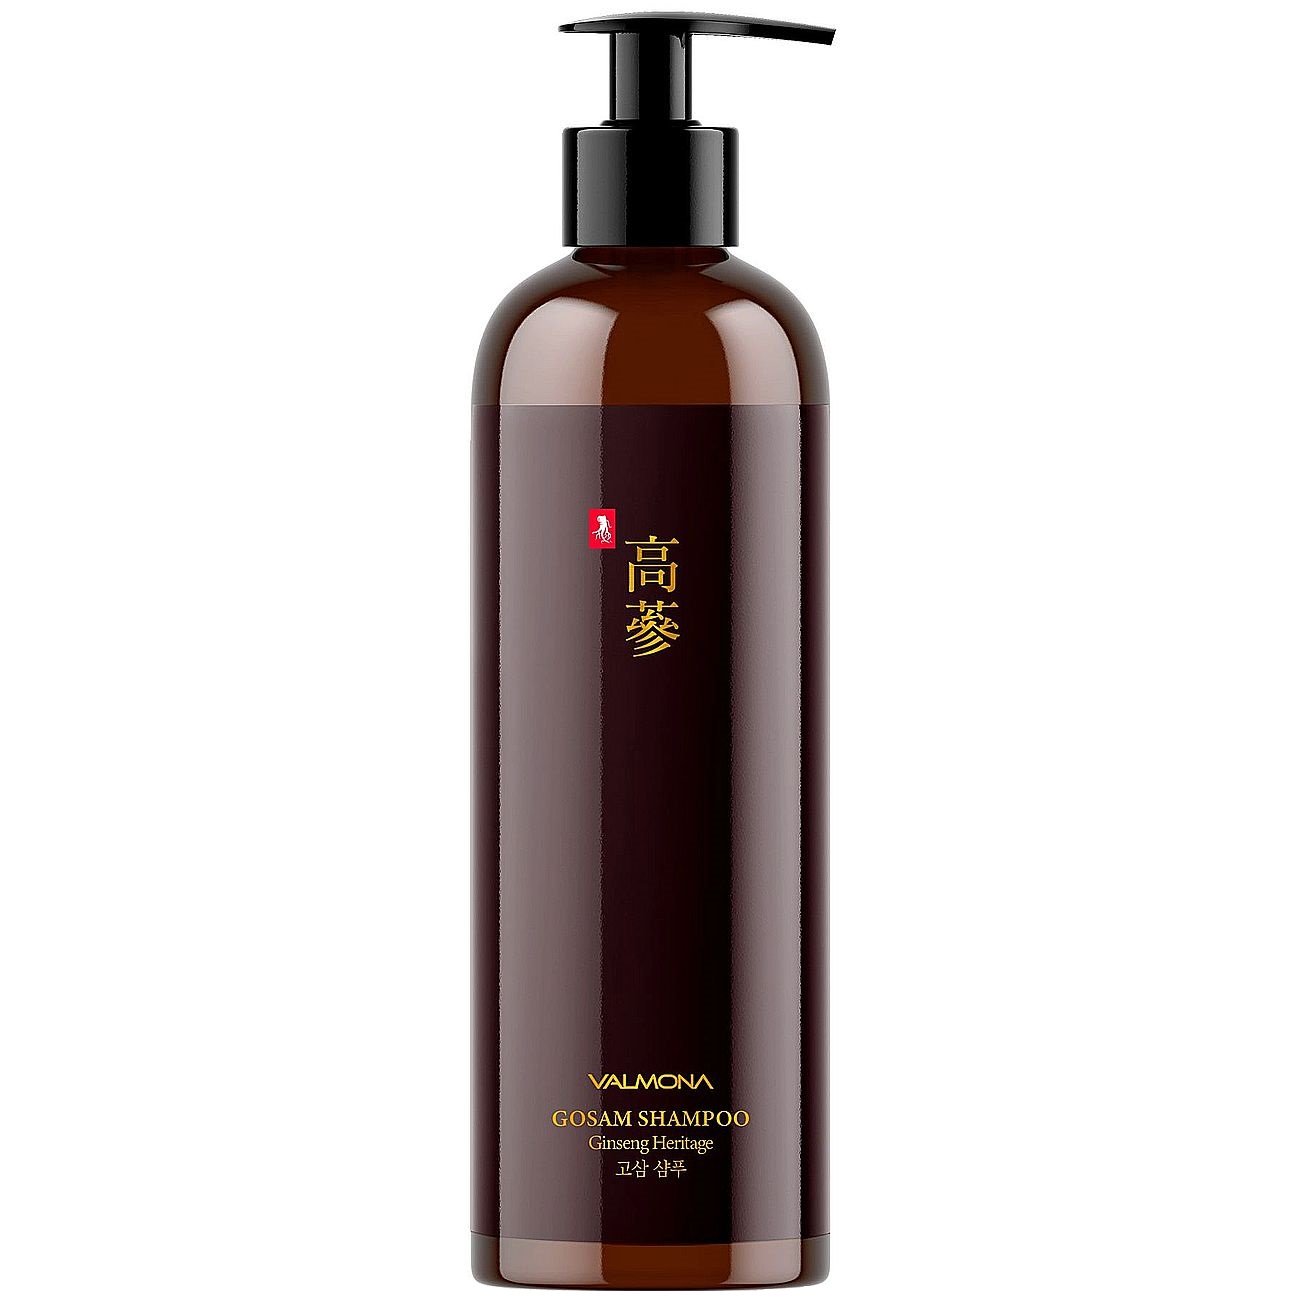 Шампунь для волос Valmona Ginseng Heritage Gosam Shampoo, 300 мл - фото 1